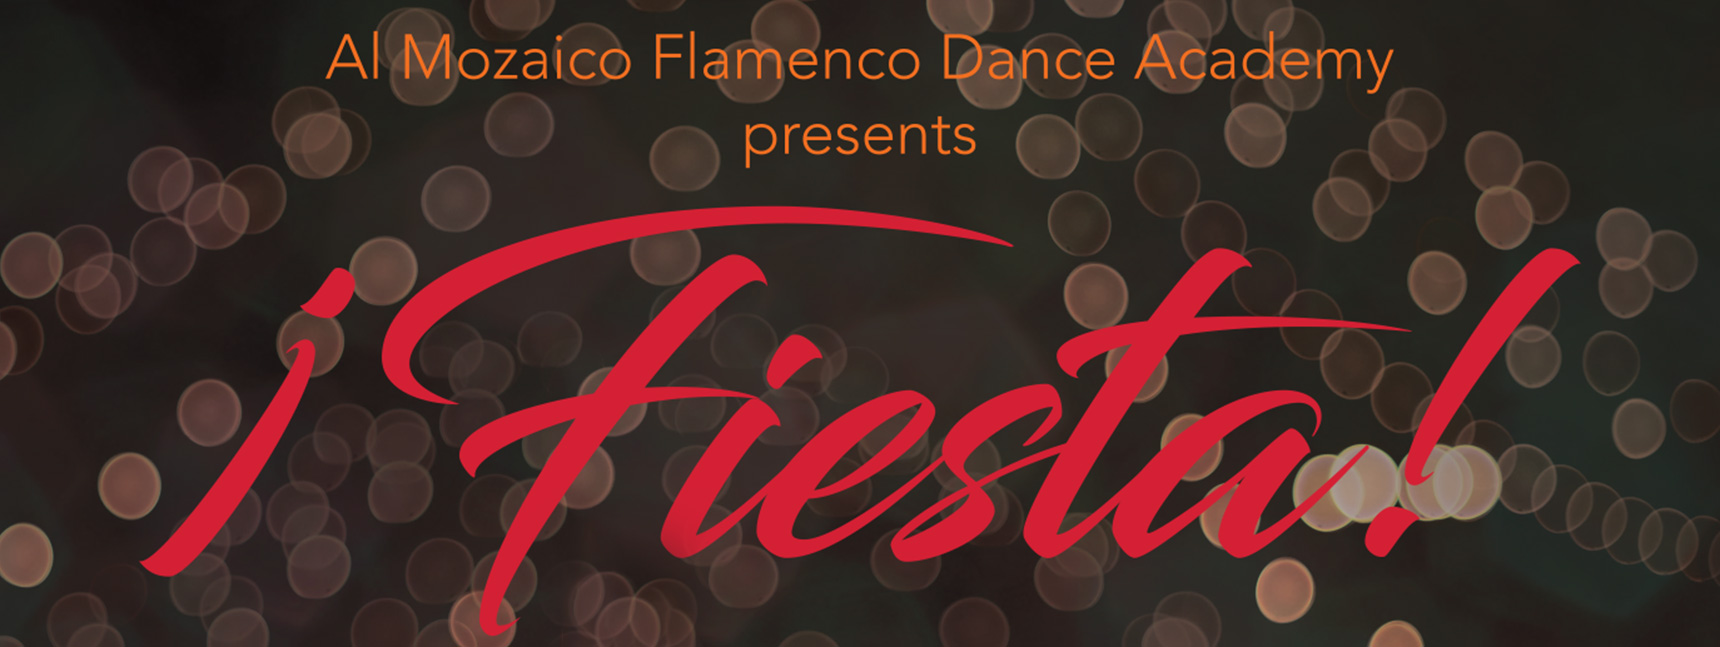 Mozaico-Flamenco-Fiesta-2018